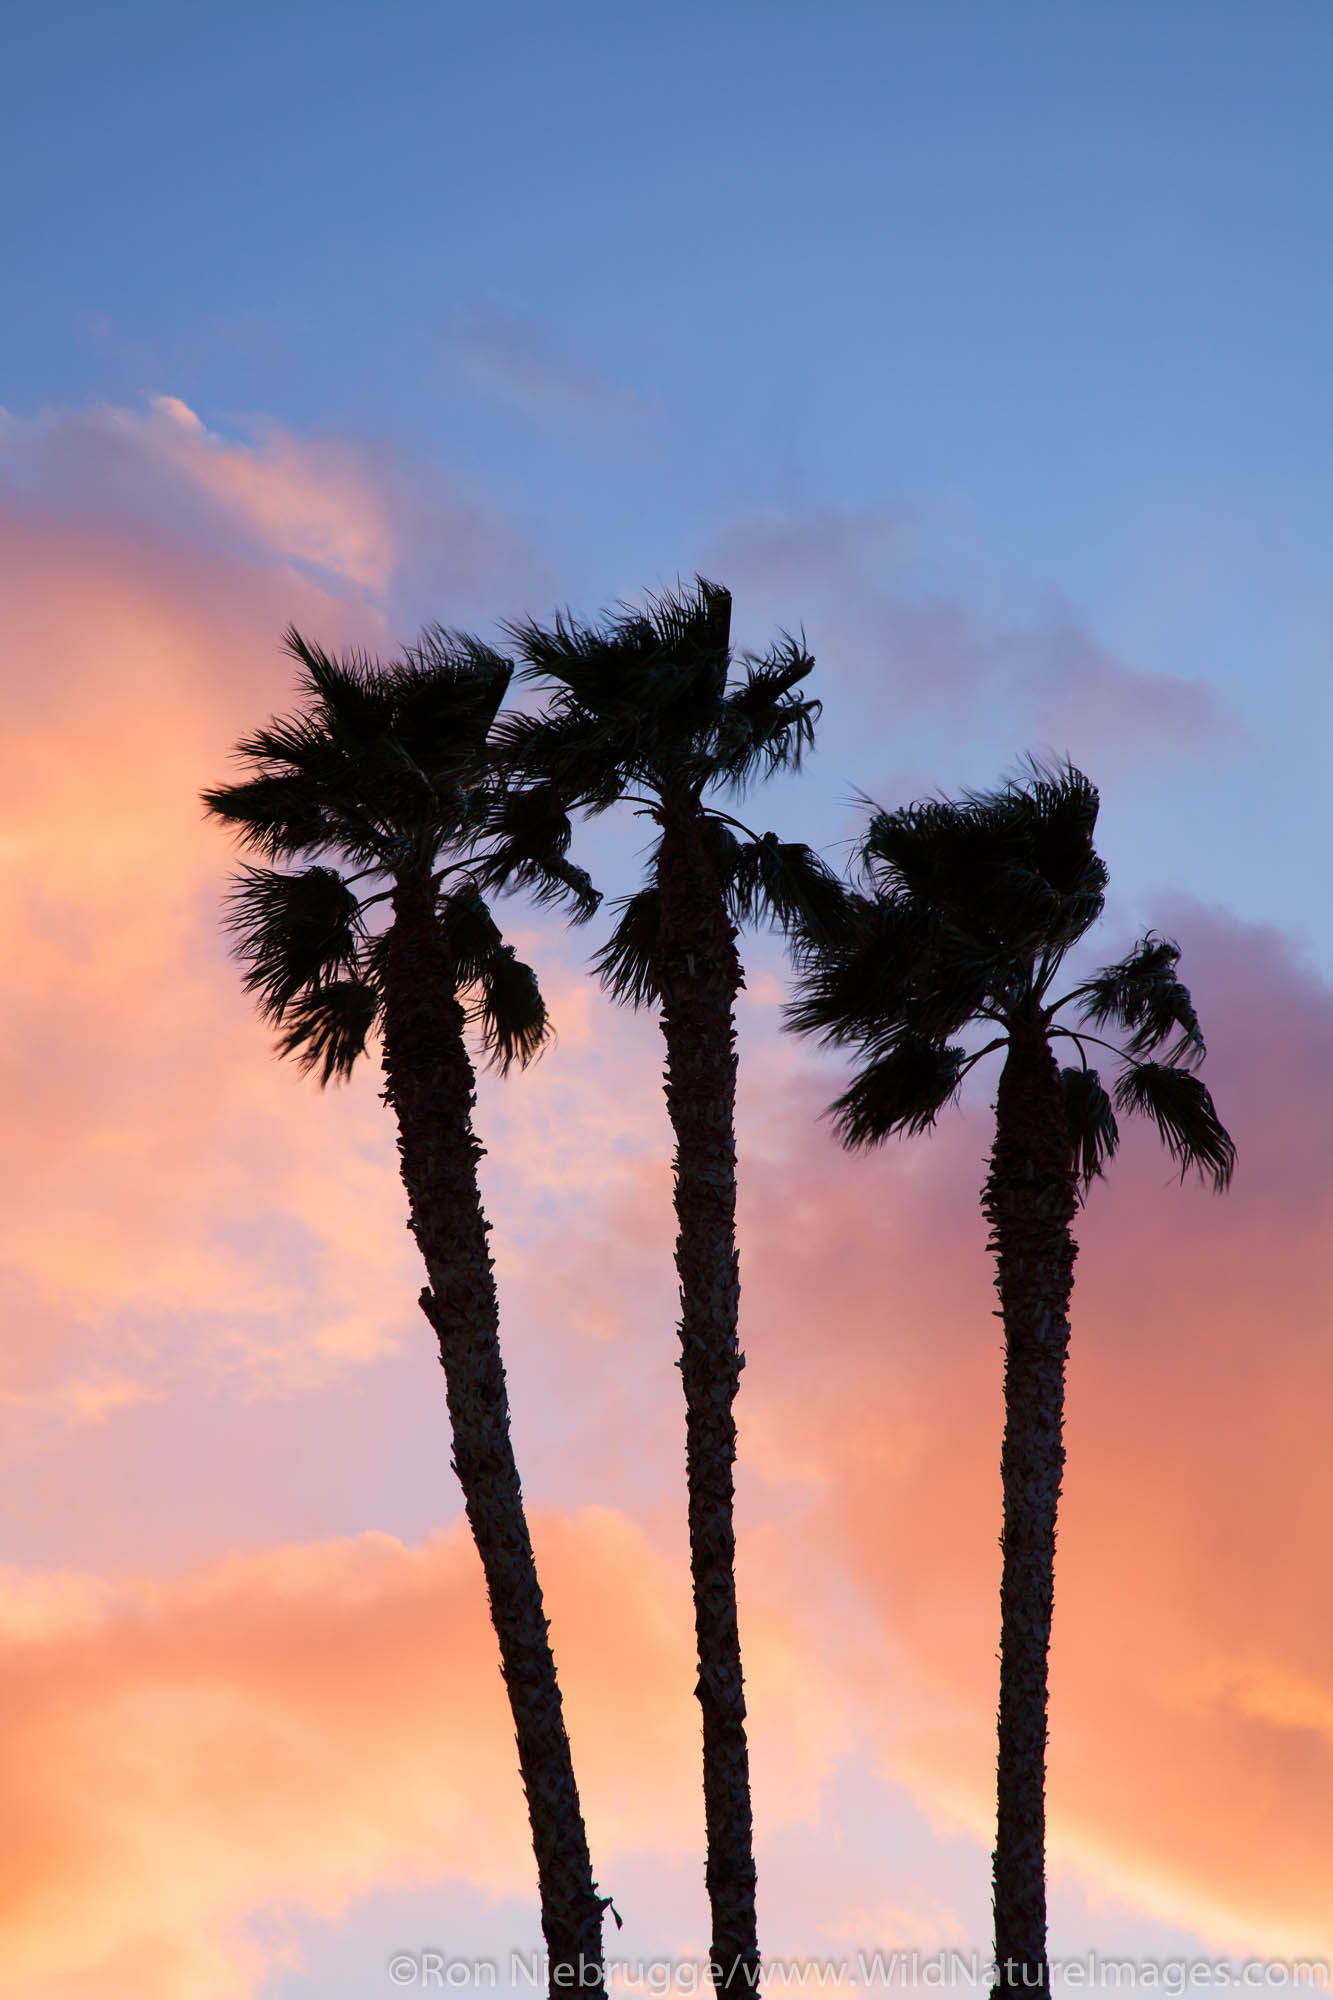 Palm trees at the Callville Bay Marina, Lake Mead National Recreation Area, near Las Vegas, Nevada.